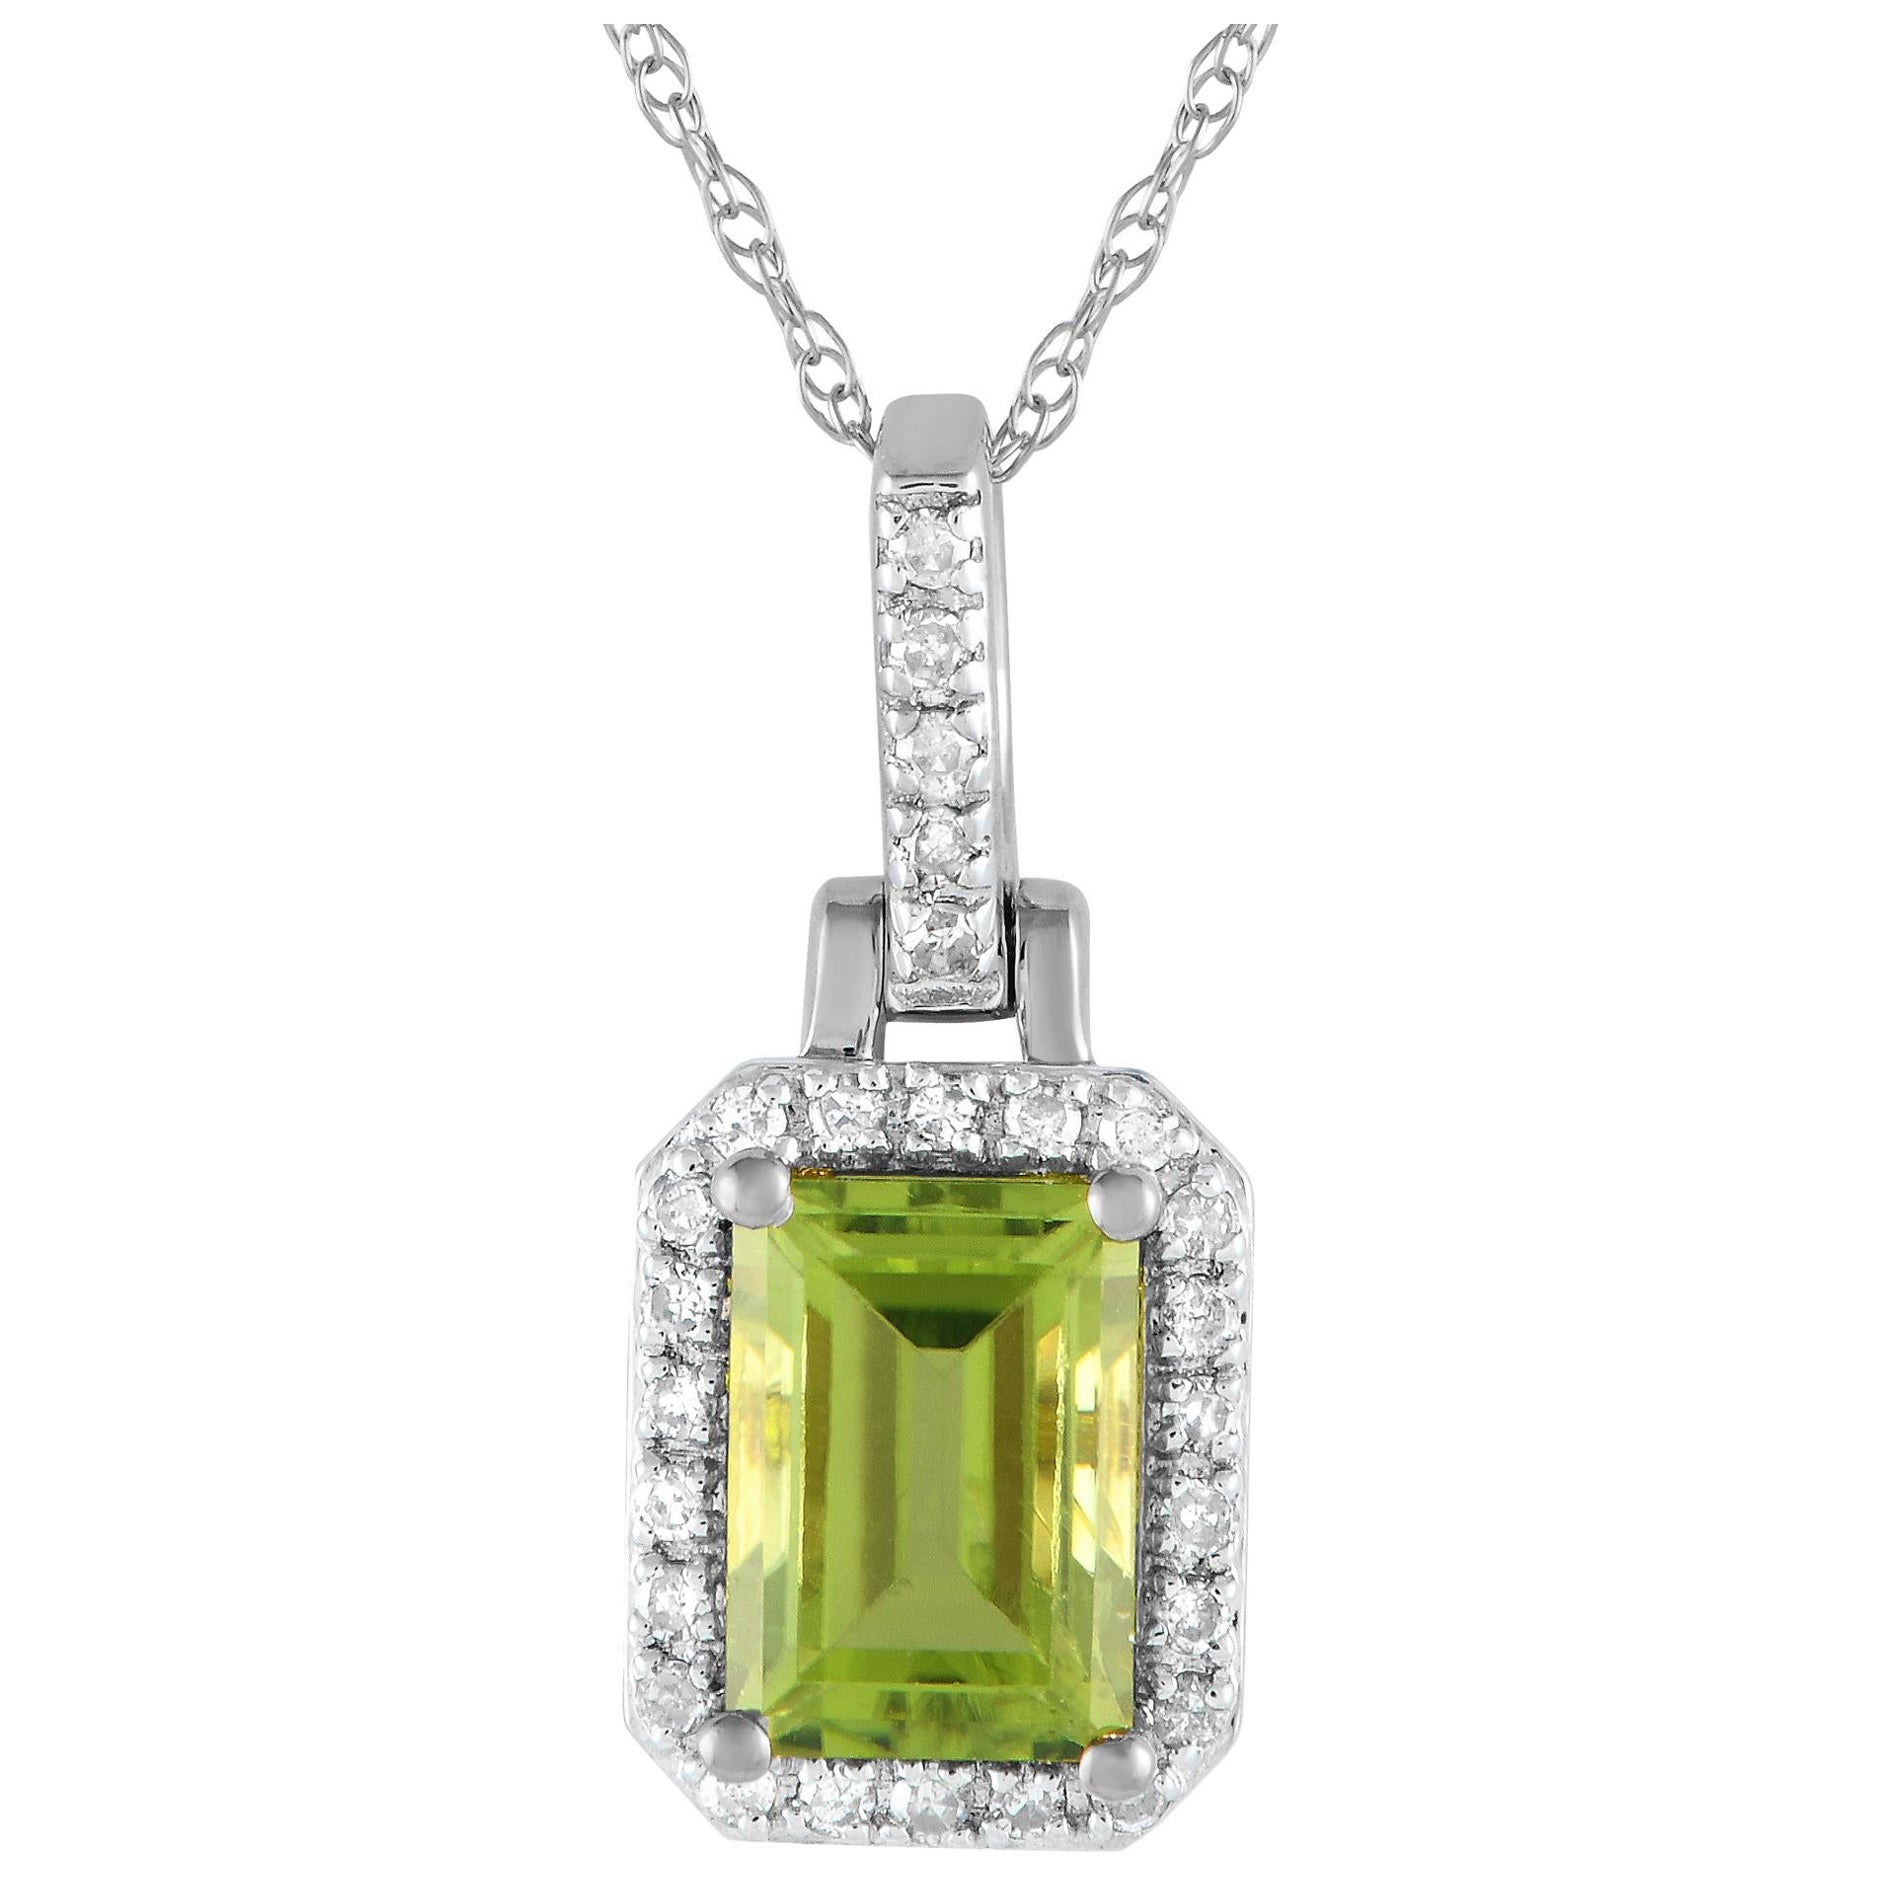 LB Exclusive 14K White Gold 0.12ct Diamond & Emerald-Cut Necklace PD4-15501 WPE For Sale